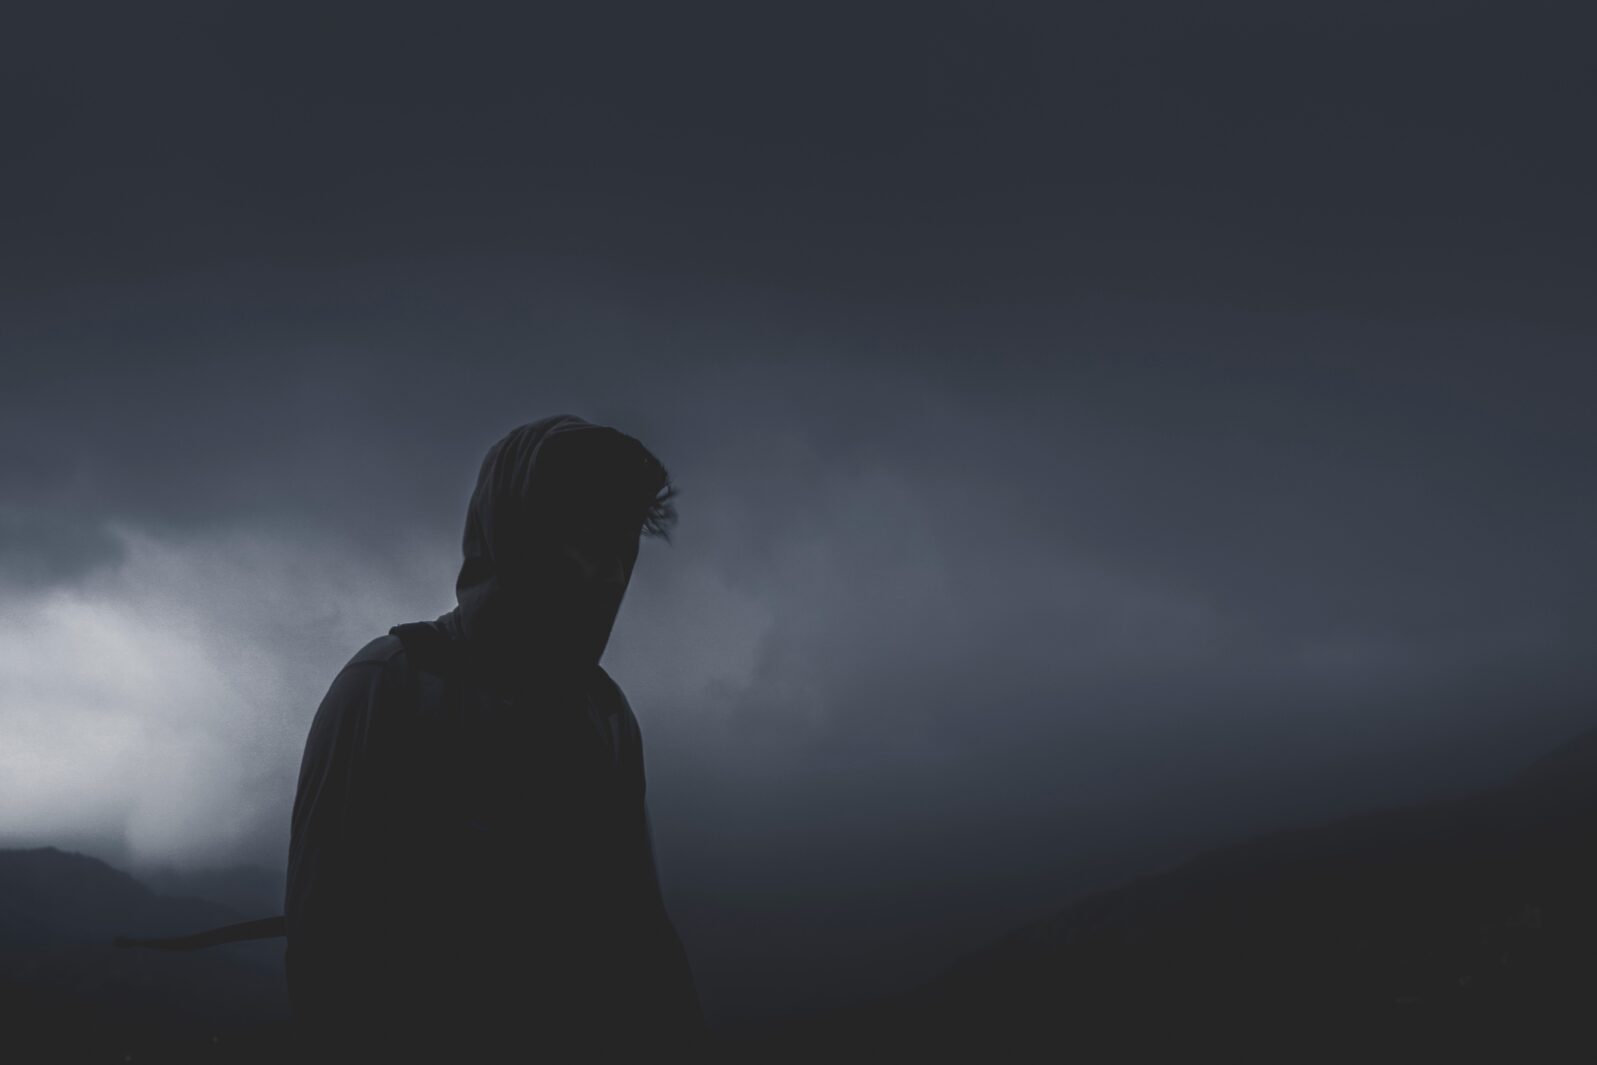 Silhouette of a man against a dark, cloudy sky